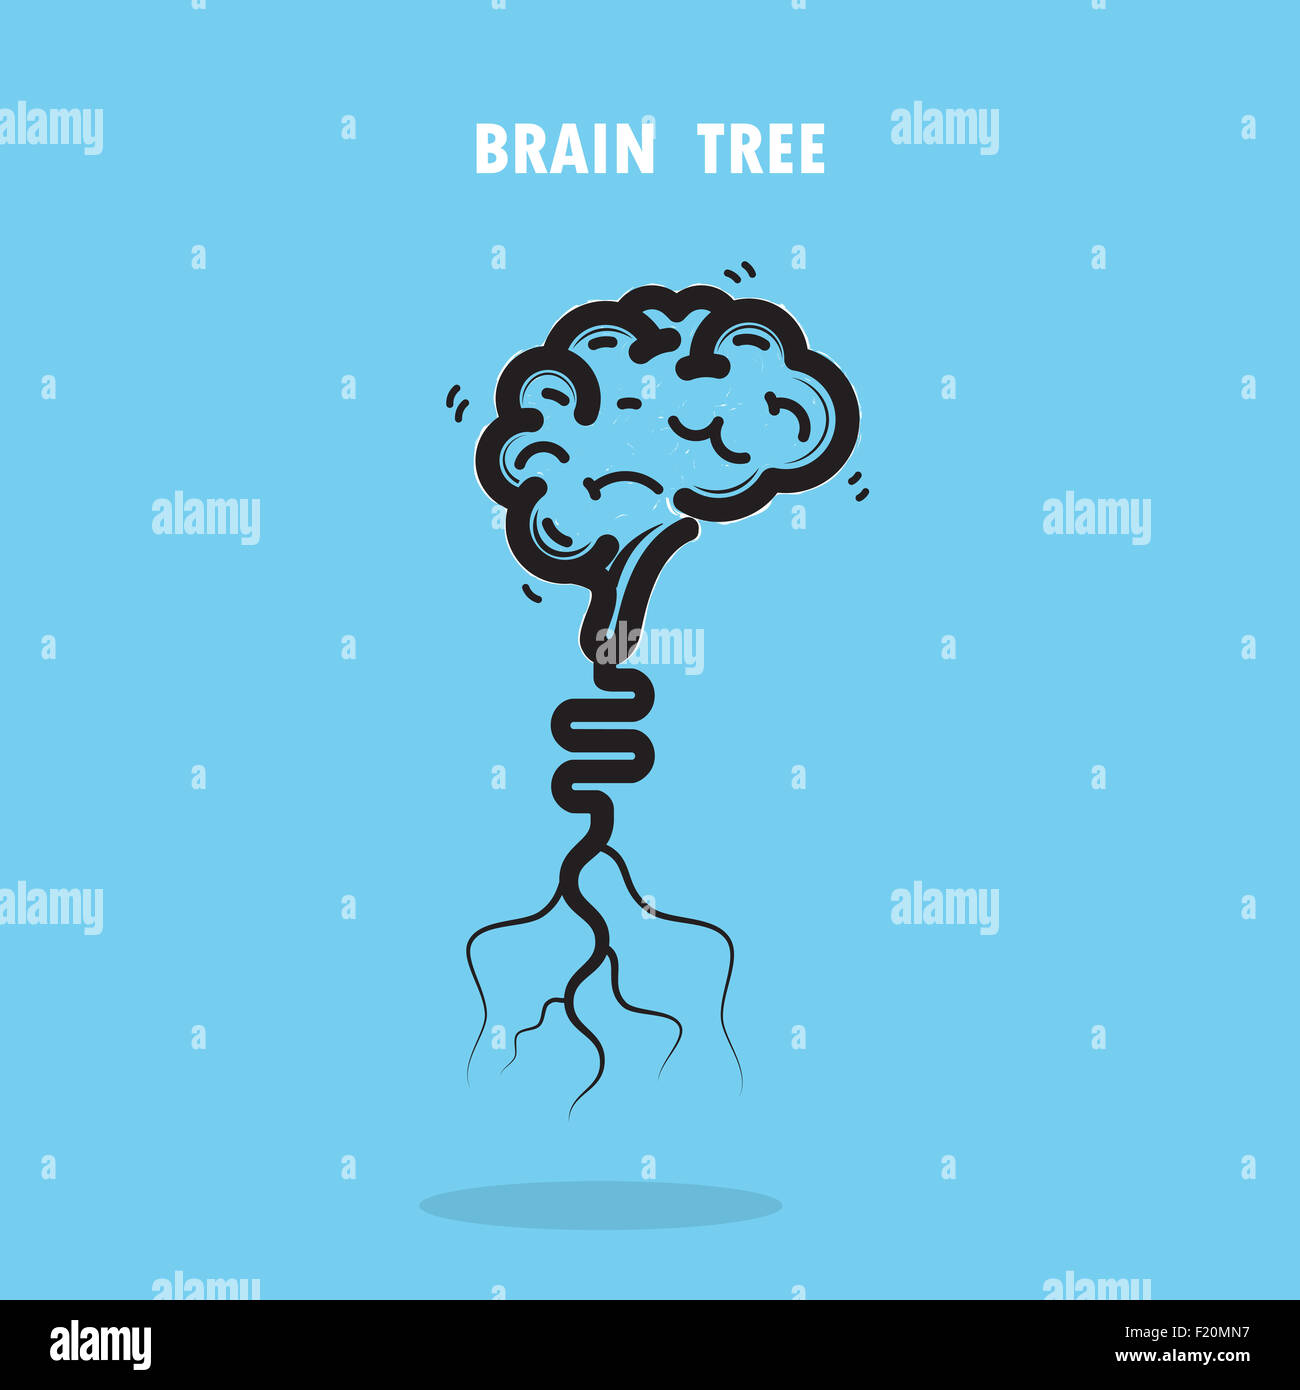 Creative brain tree abstract logo design.Corporate business industrial creative logotype.Brain tree symbol Stock Photo